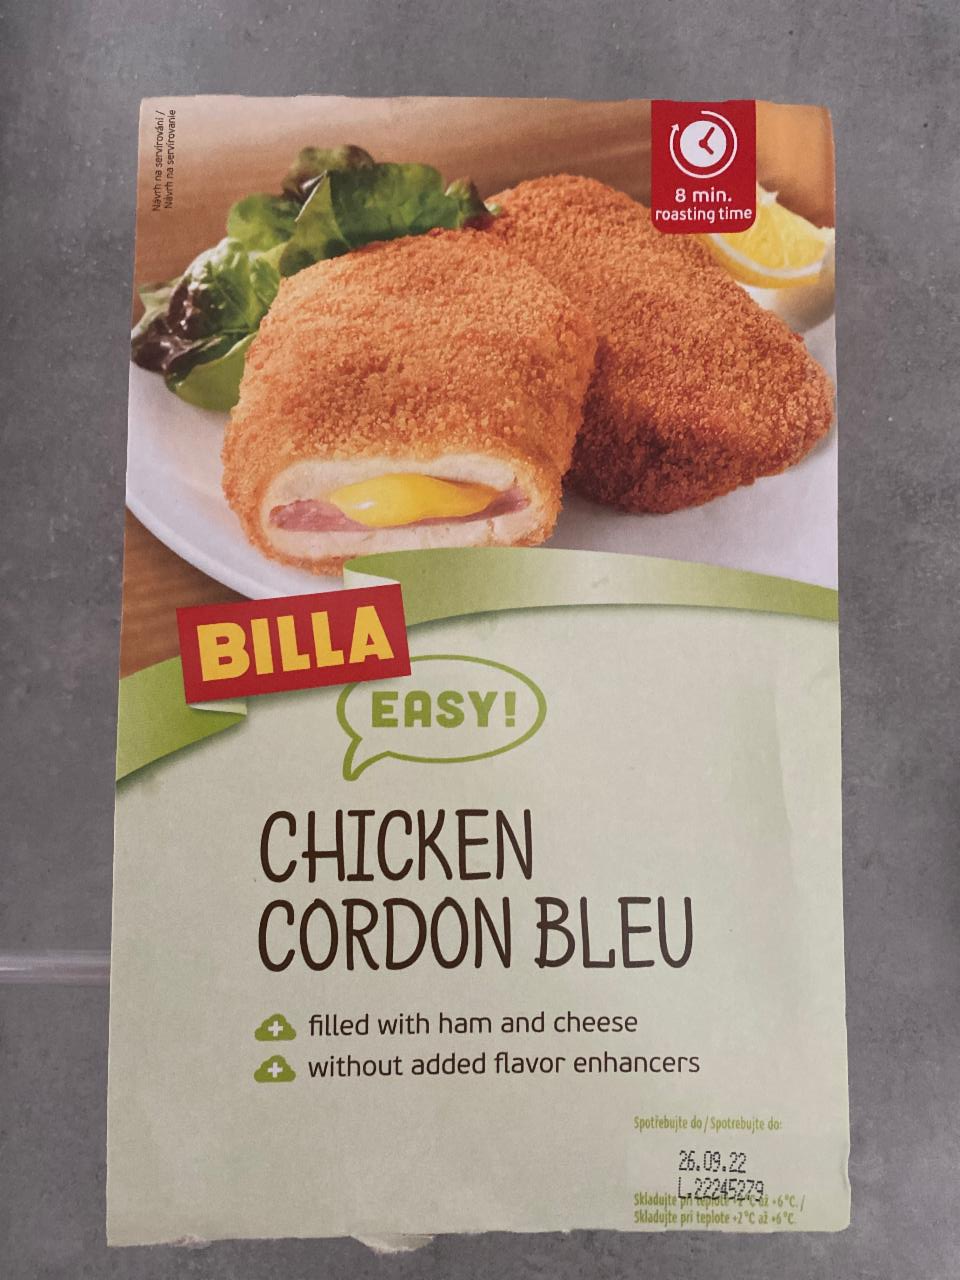 Фото - Chicken cordon bleu Billa